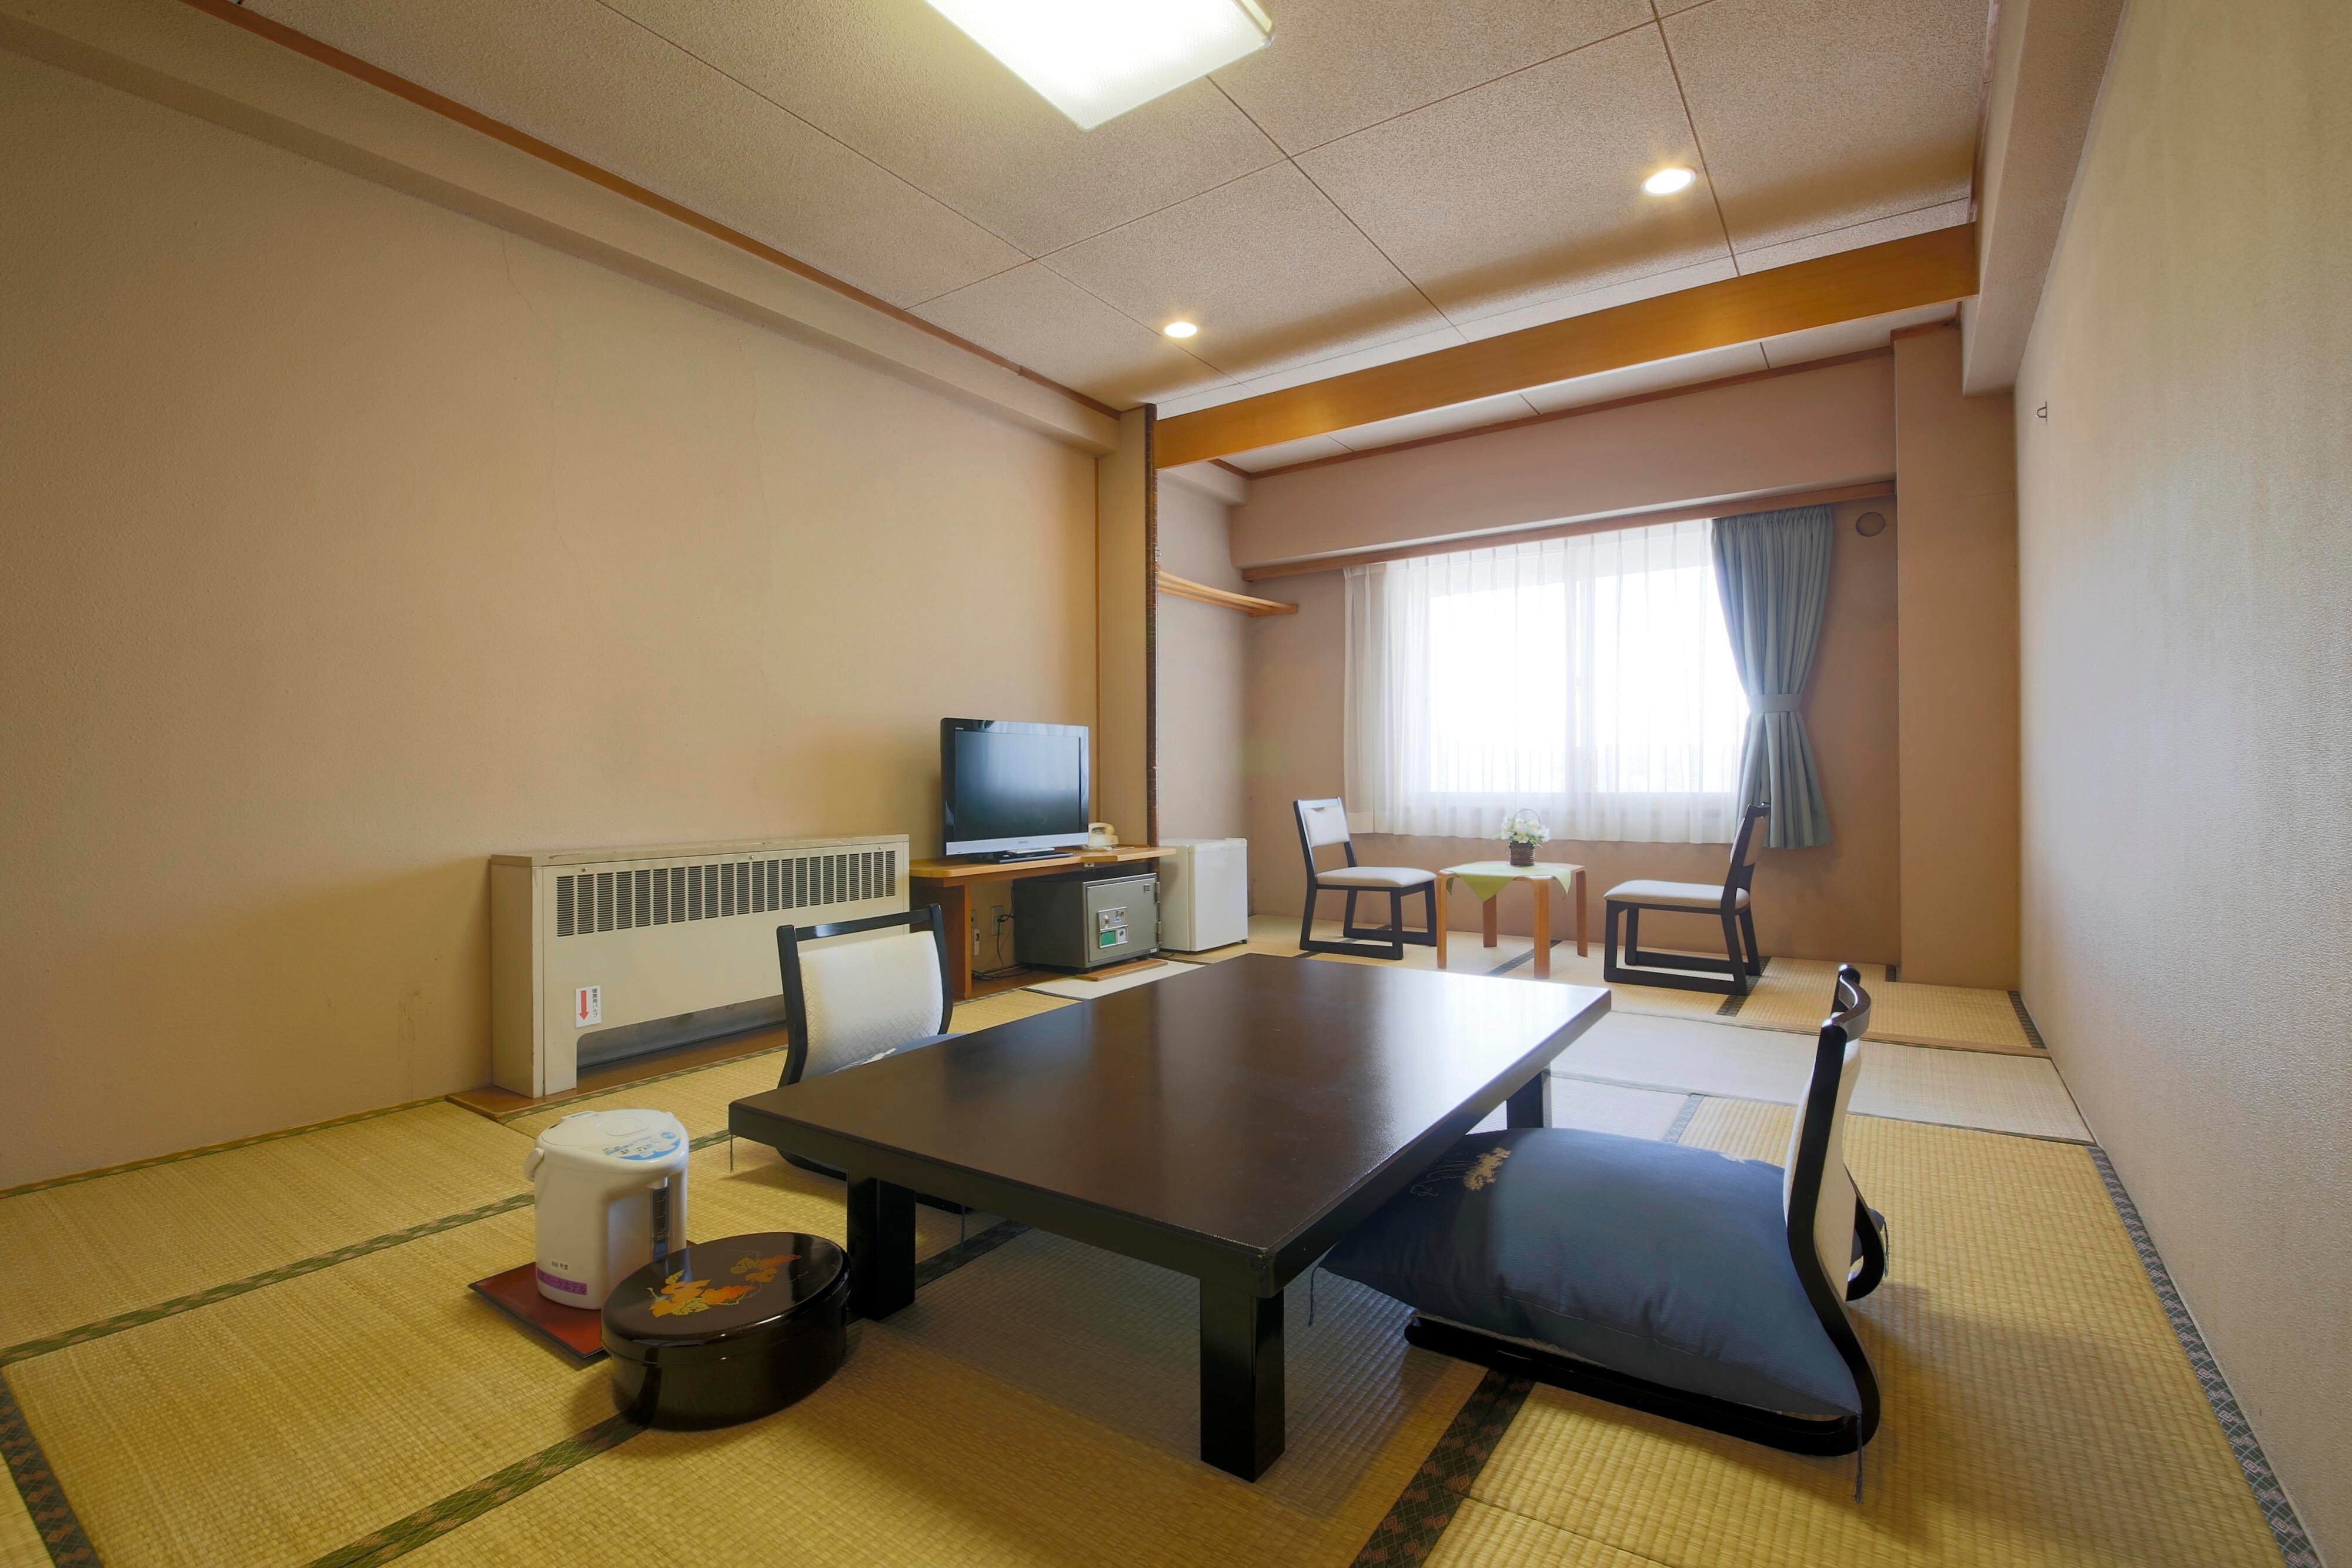 Japanese-style room 10-12 tatami mats